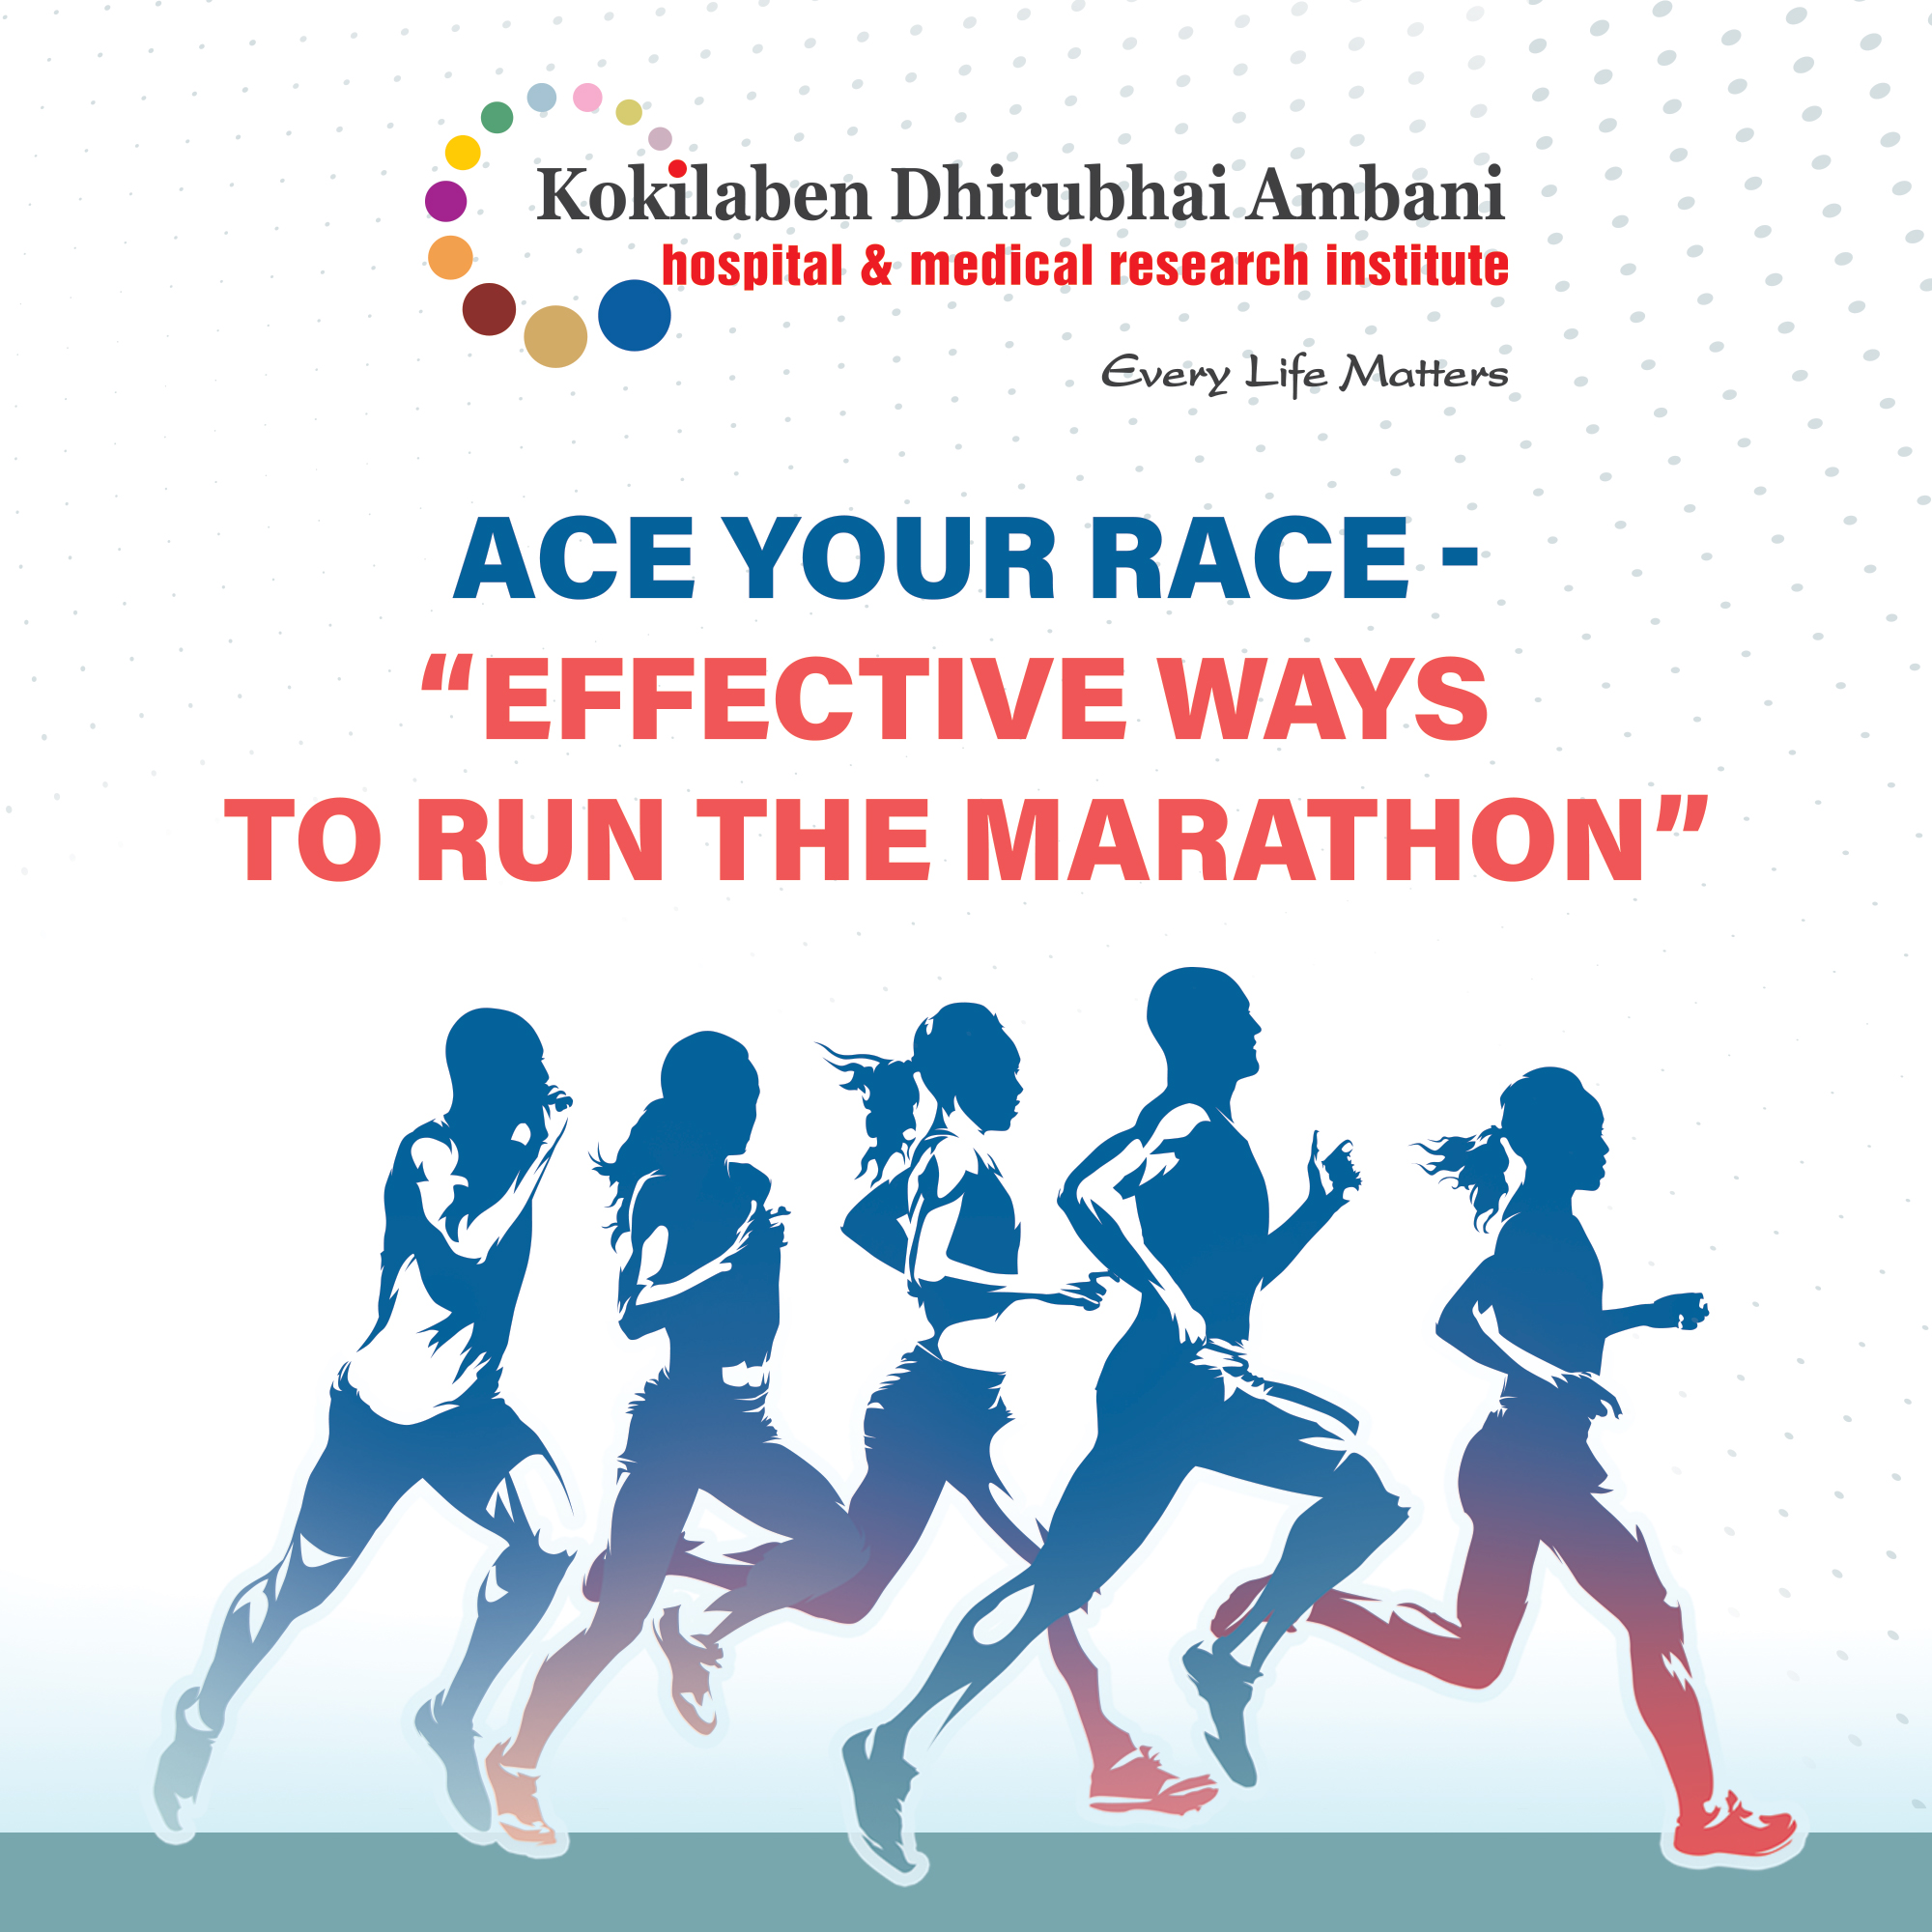 Ace Your Race - Effective ways to run the Marathon